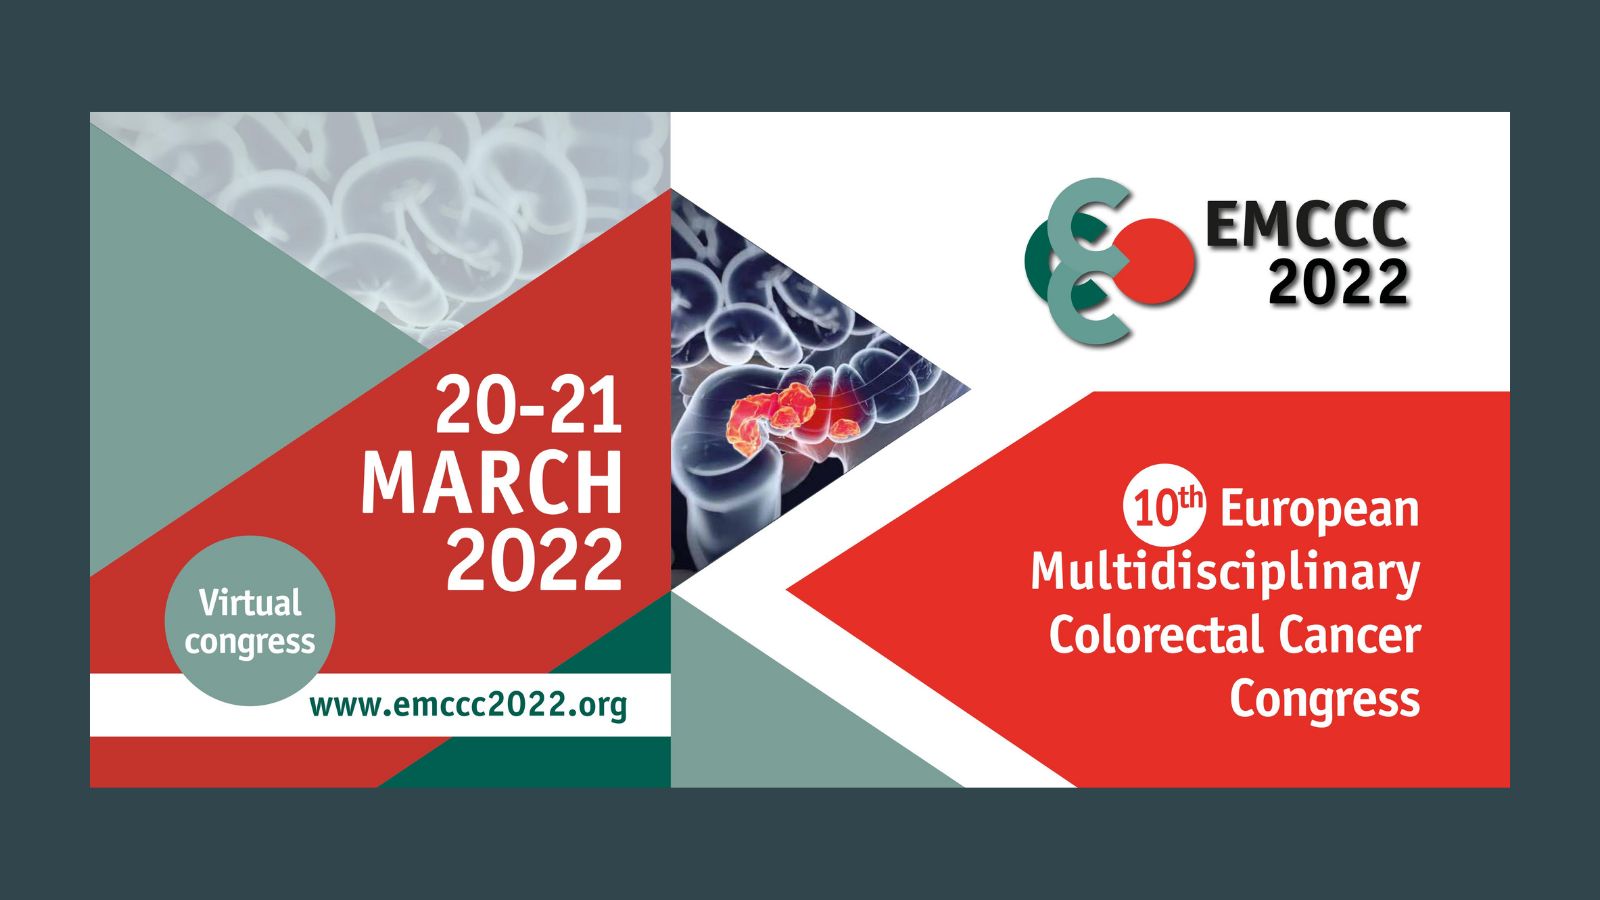 10th European Multidisciplinary Colorectal Cancer Congress